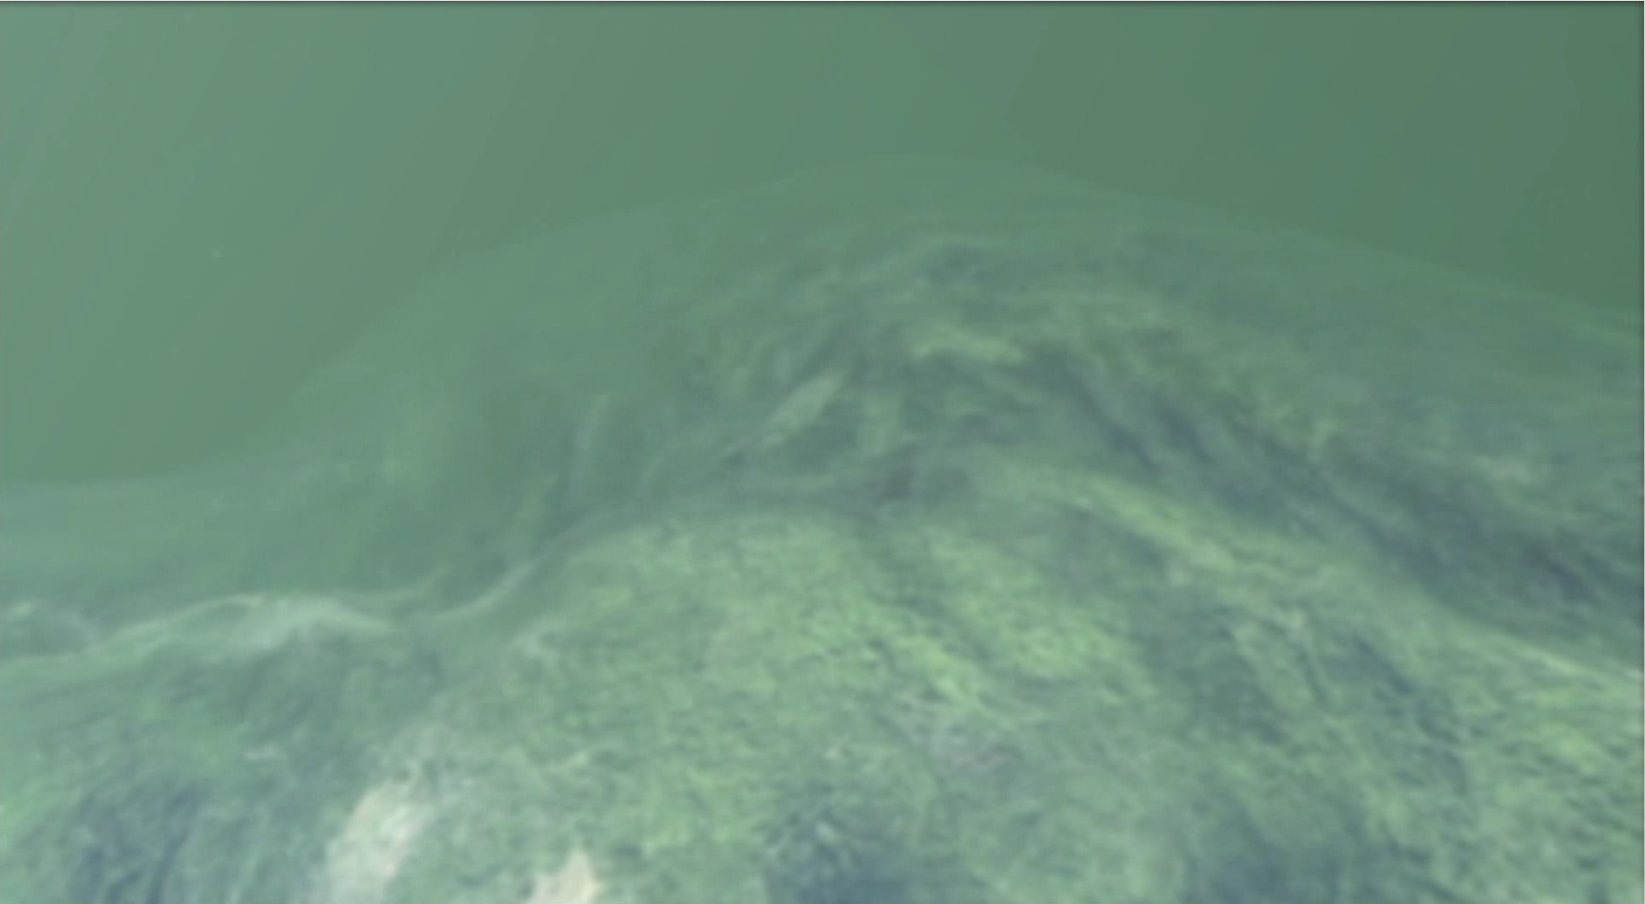 Underwater Simulation